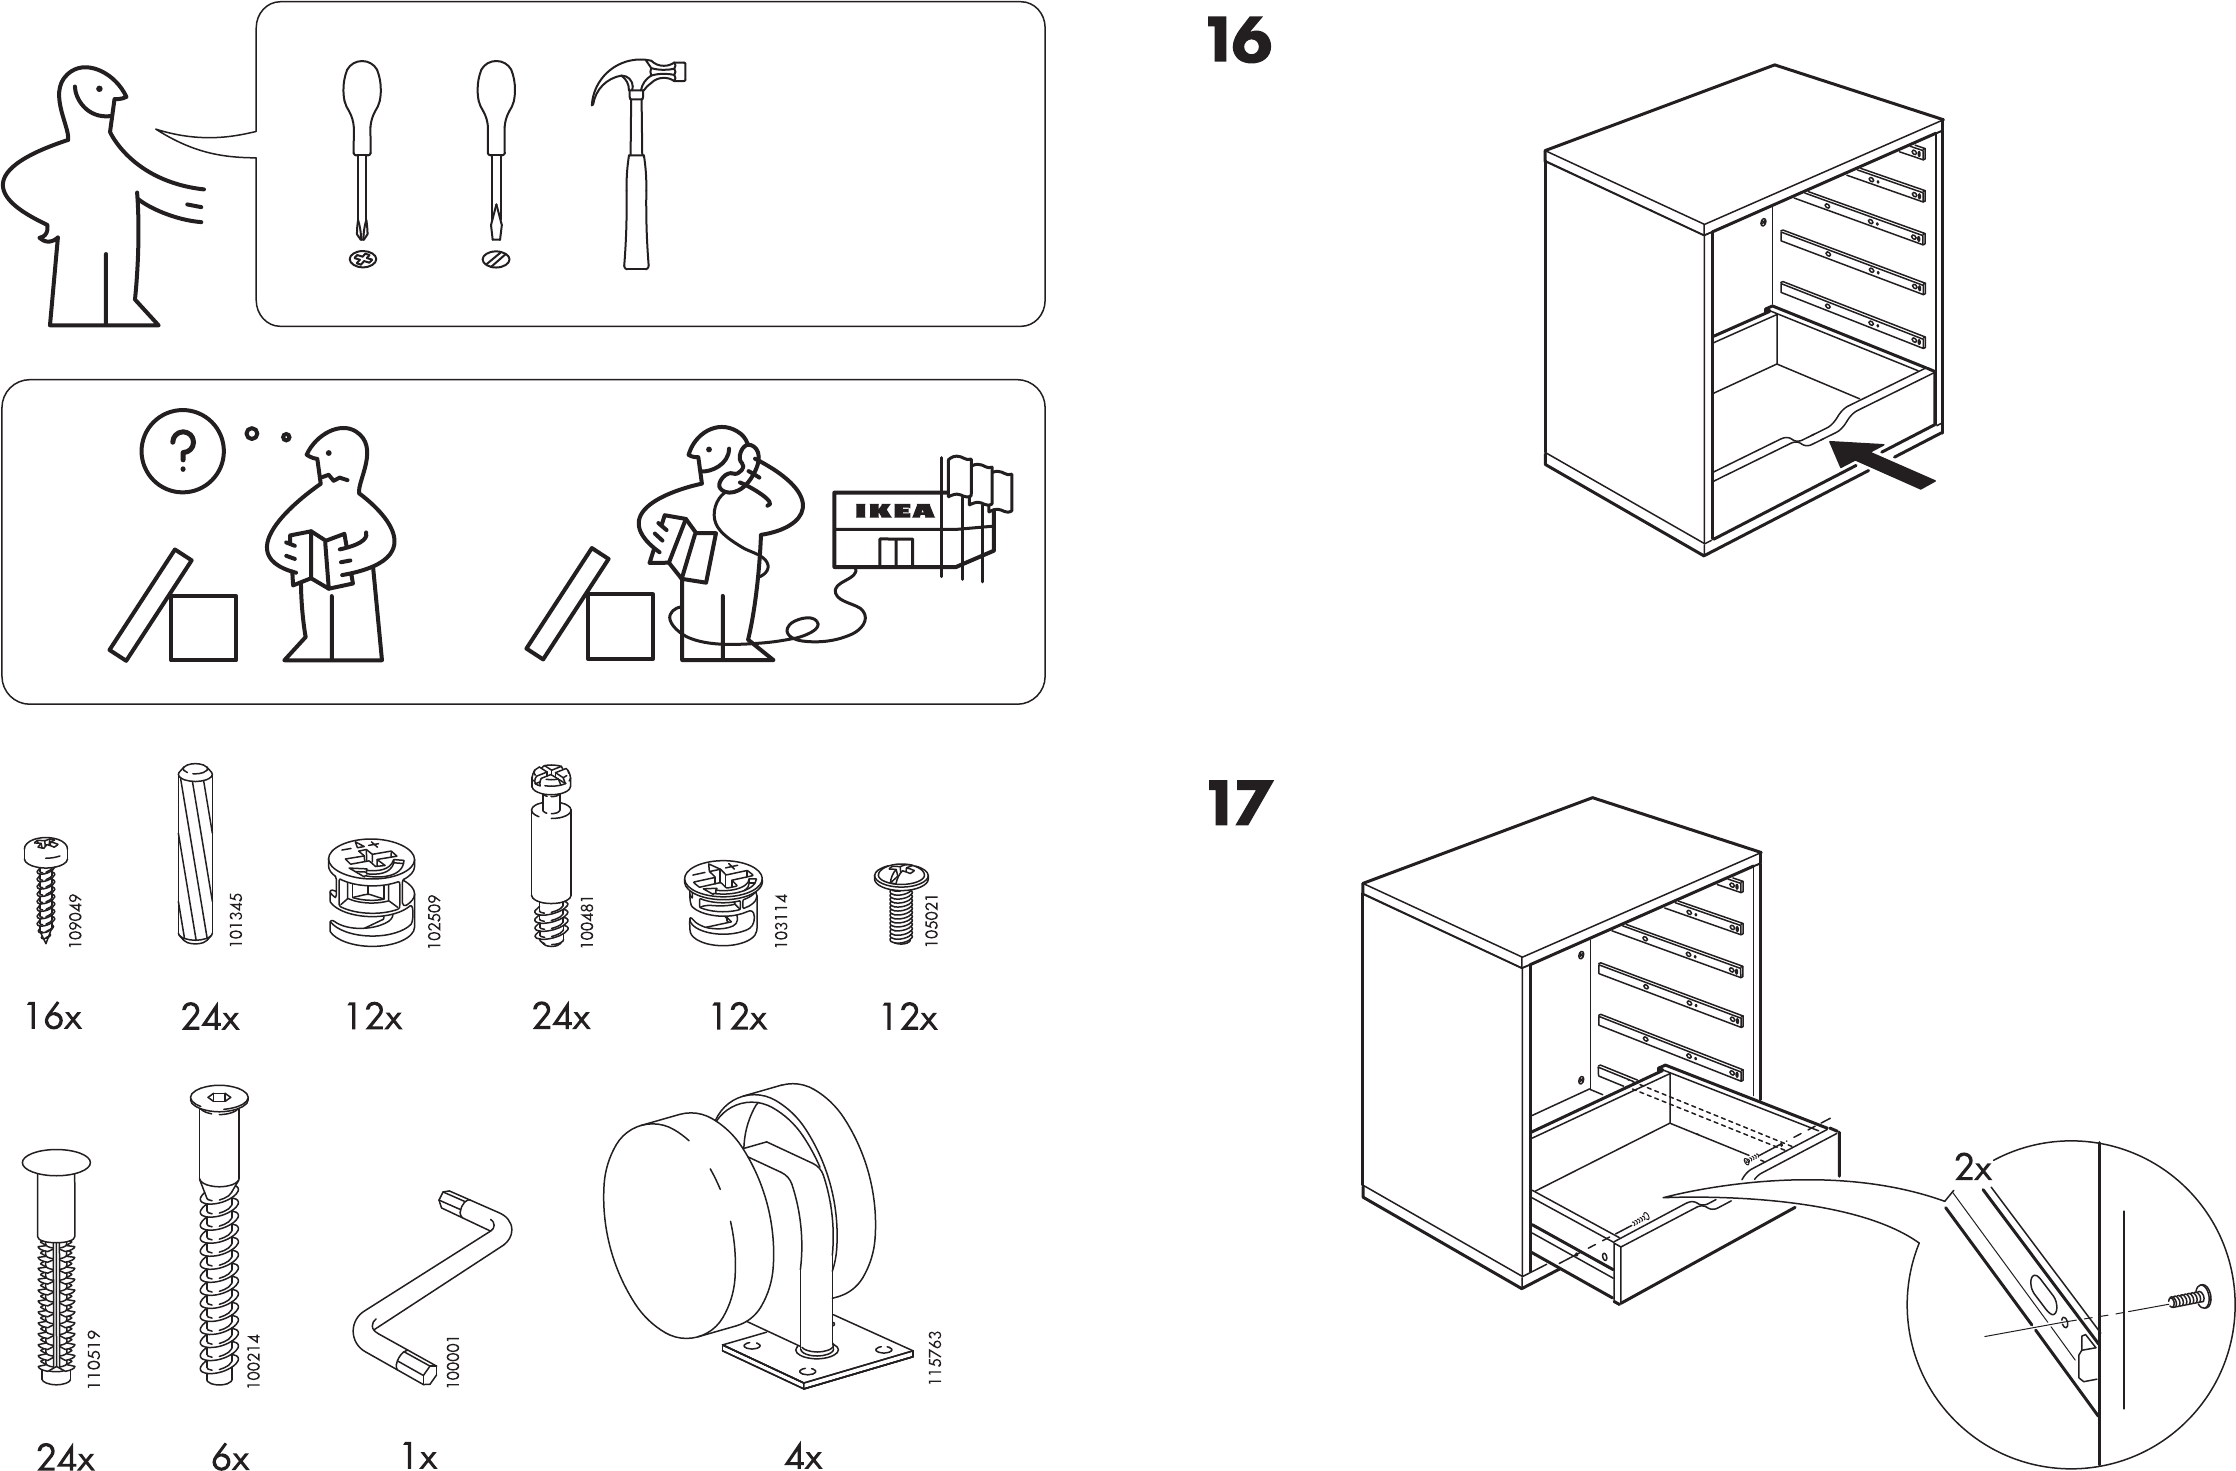 Ikea Alex Drawer Unit Casters Wht Assembly Instruction